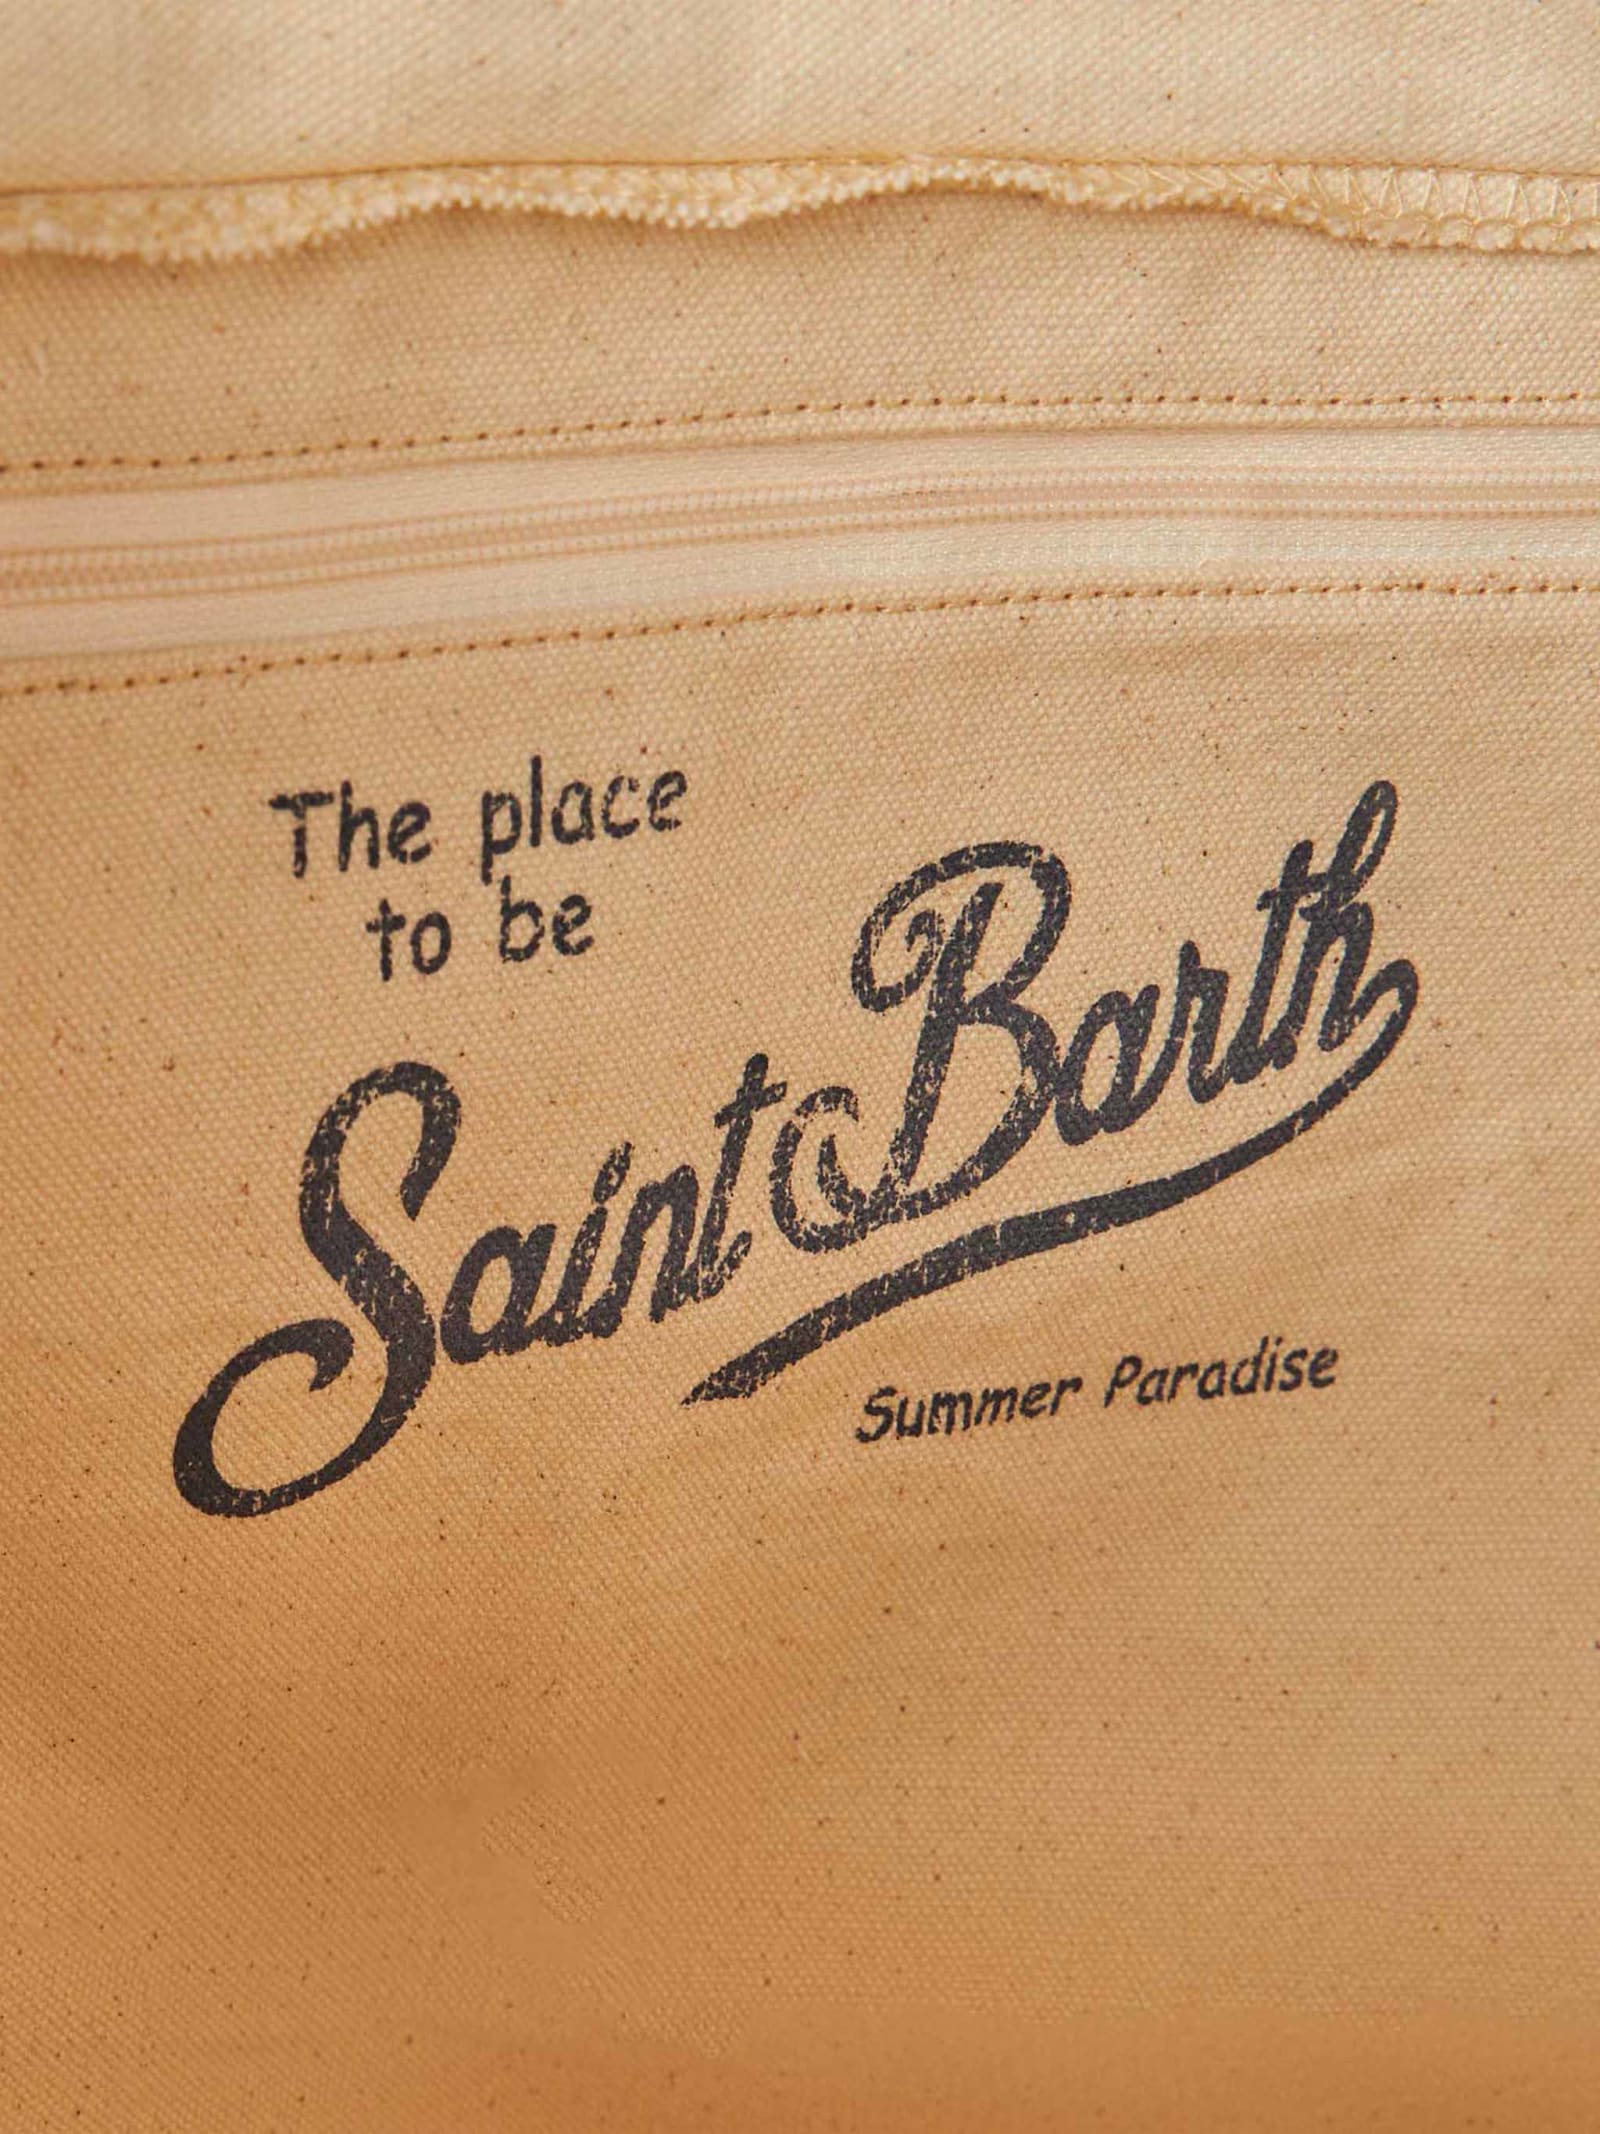 Shop Mc2 Saint Barth Vanity White Canvas Shoulder Bag With Fiorucci Angels Print Fiorucci Special Edition